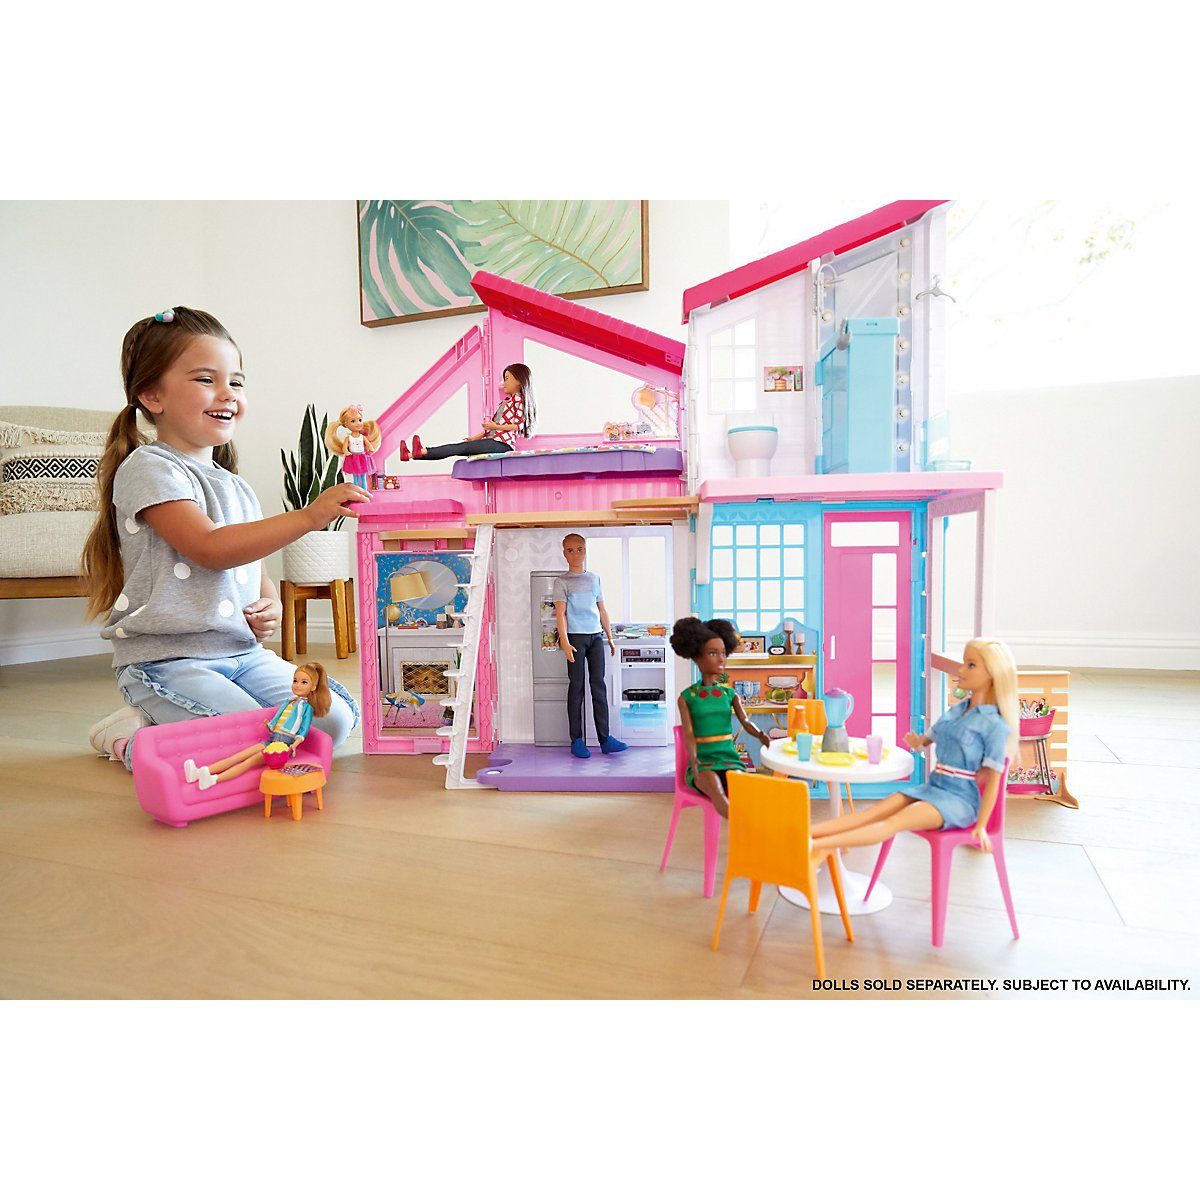 Mattel® Puppenhaus Barbie Malibu Haus, Puppenhaus, Barbie Stadthaus